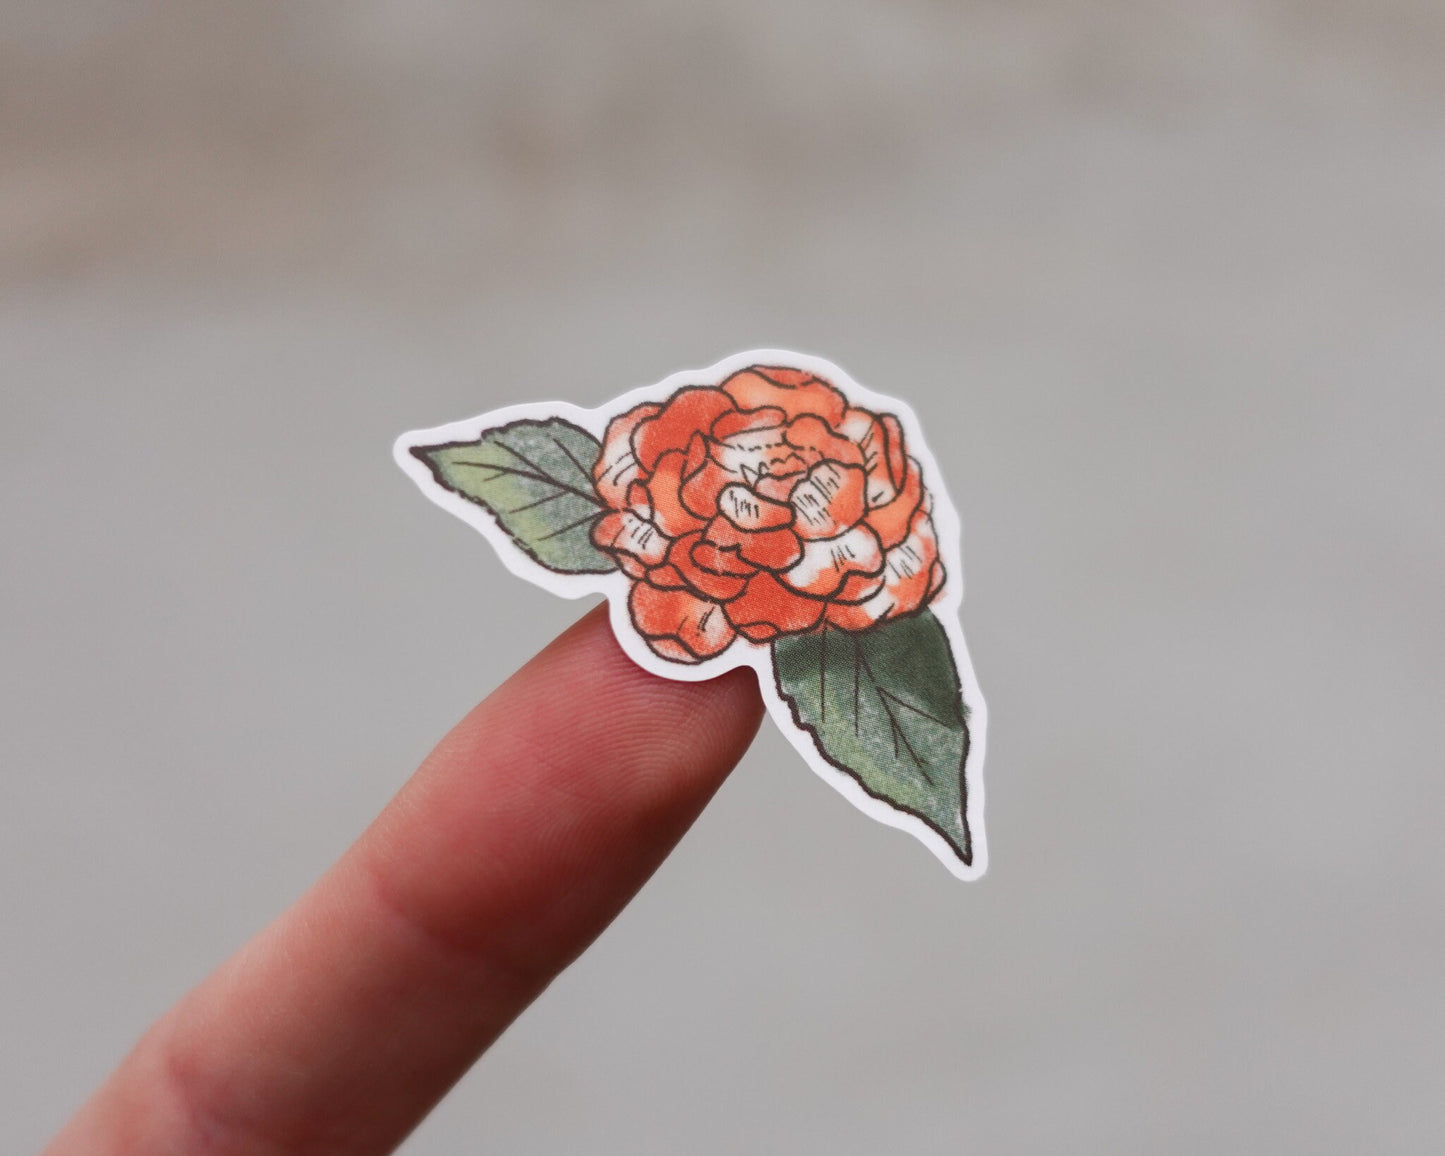 Chicken and Flowers – Stickersheet with 6 Japanese Stickers inspired by Kono Bairei Ukiyo-e